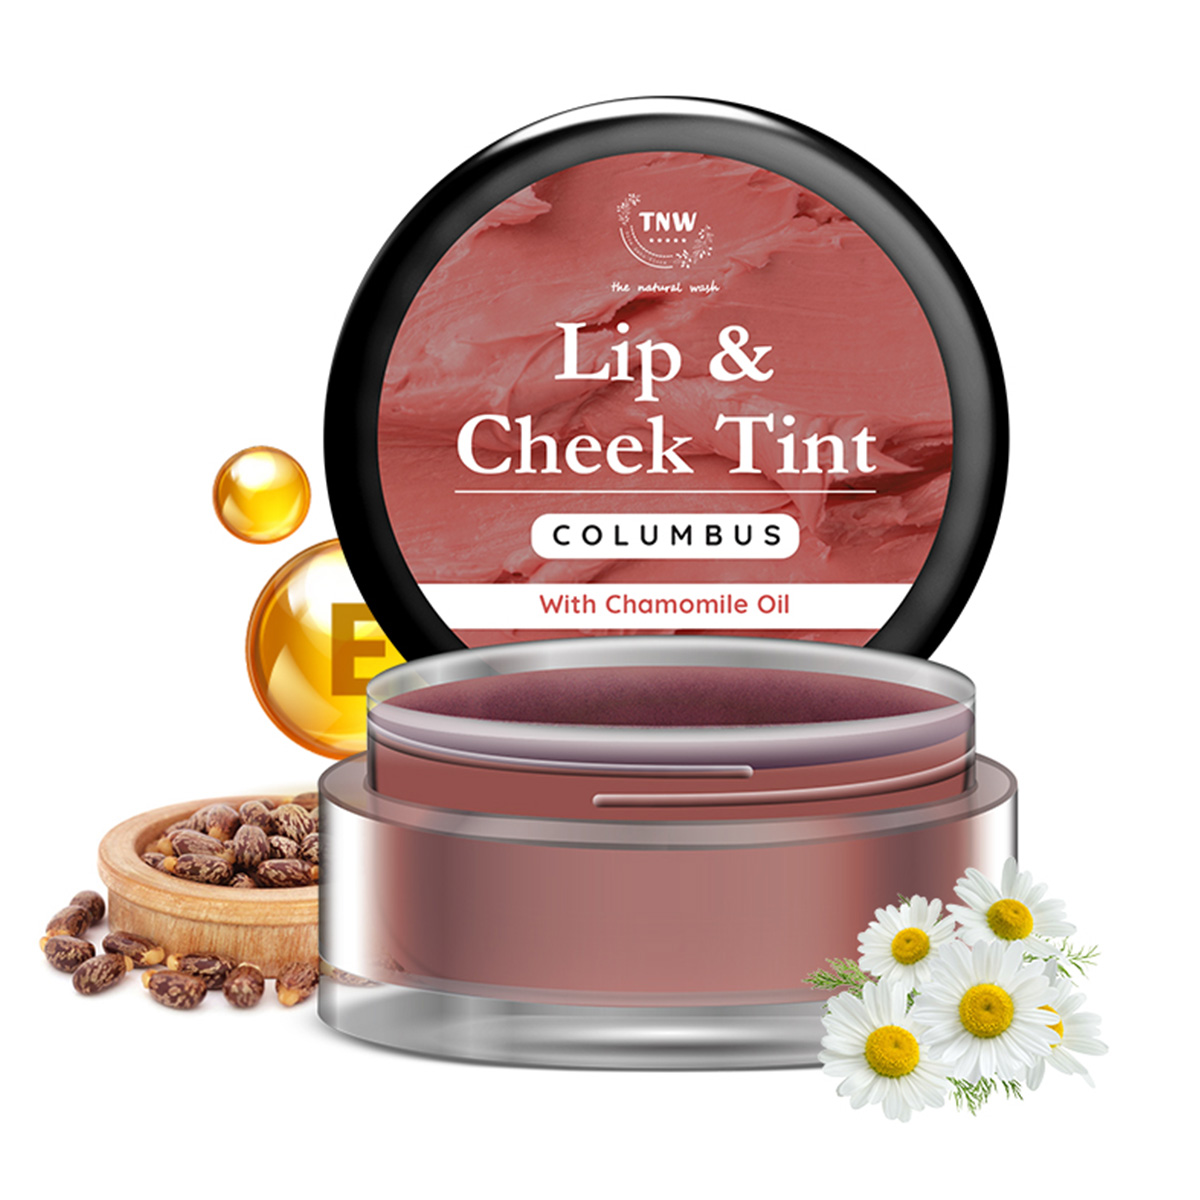 TNW - The Natural Wash Lip & Cheek Tint, 5gm